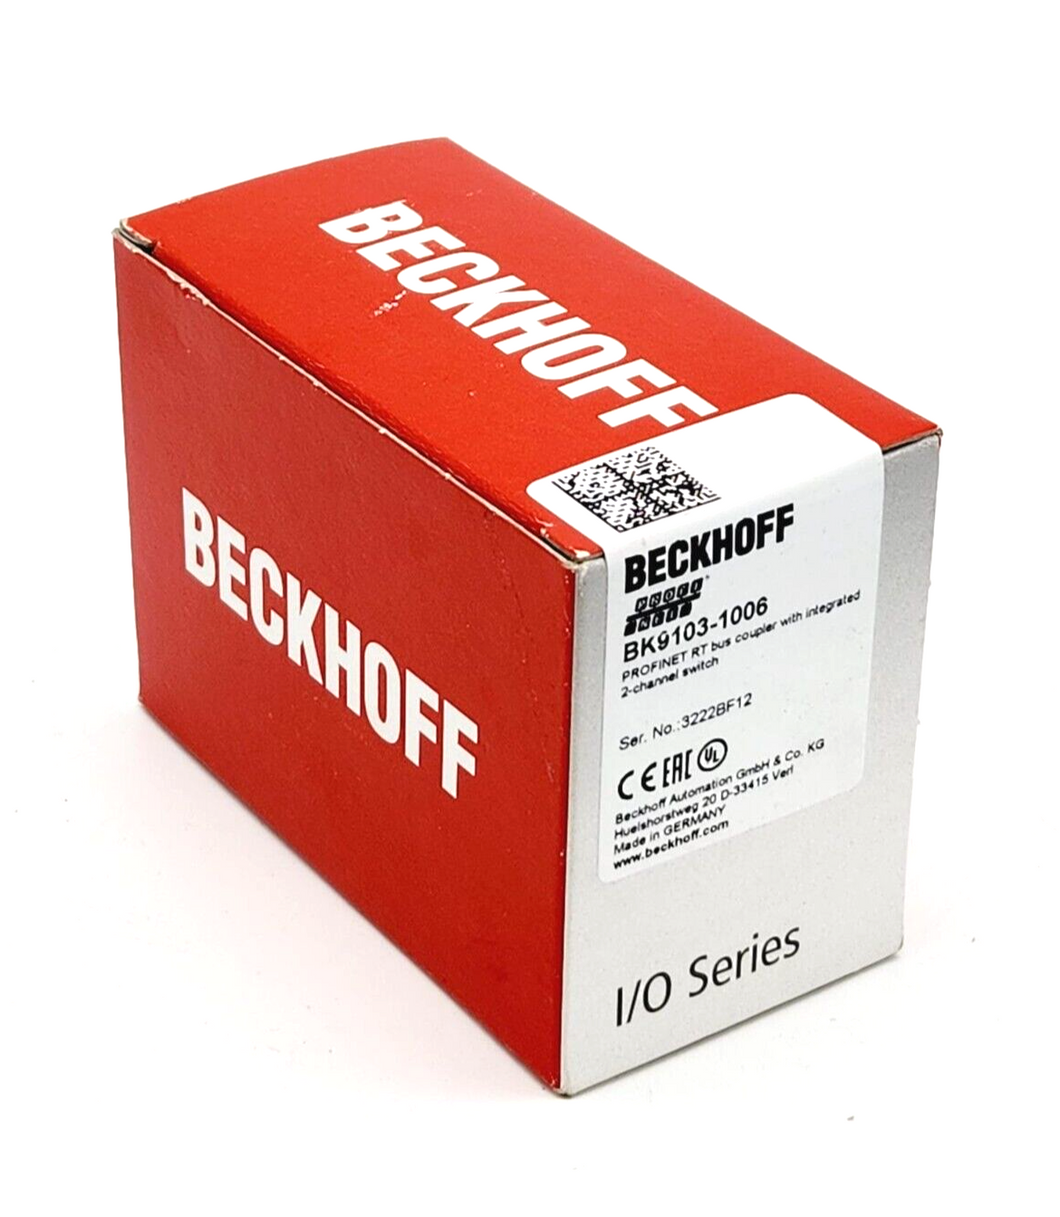 Beckhoff BK9103-1006 BK 9103-1006 PROFINET Buskoppler